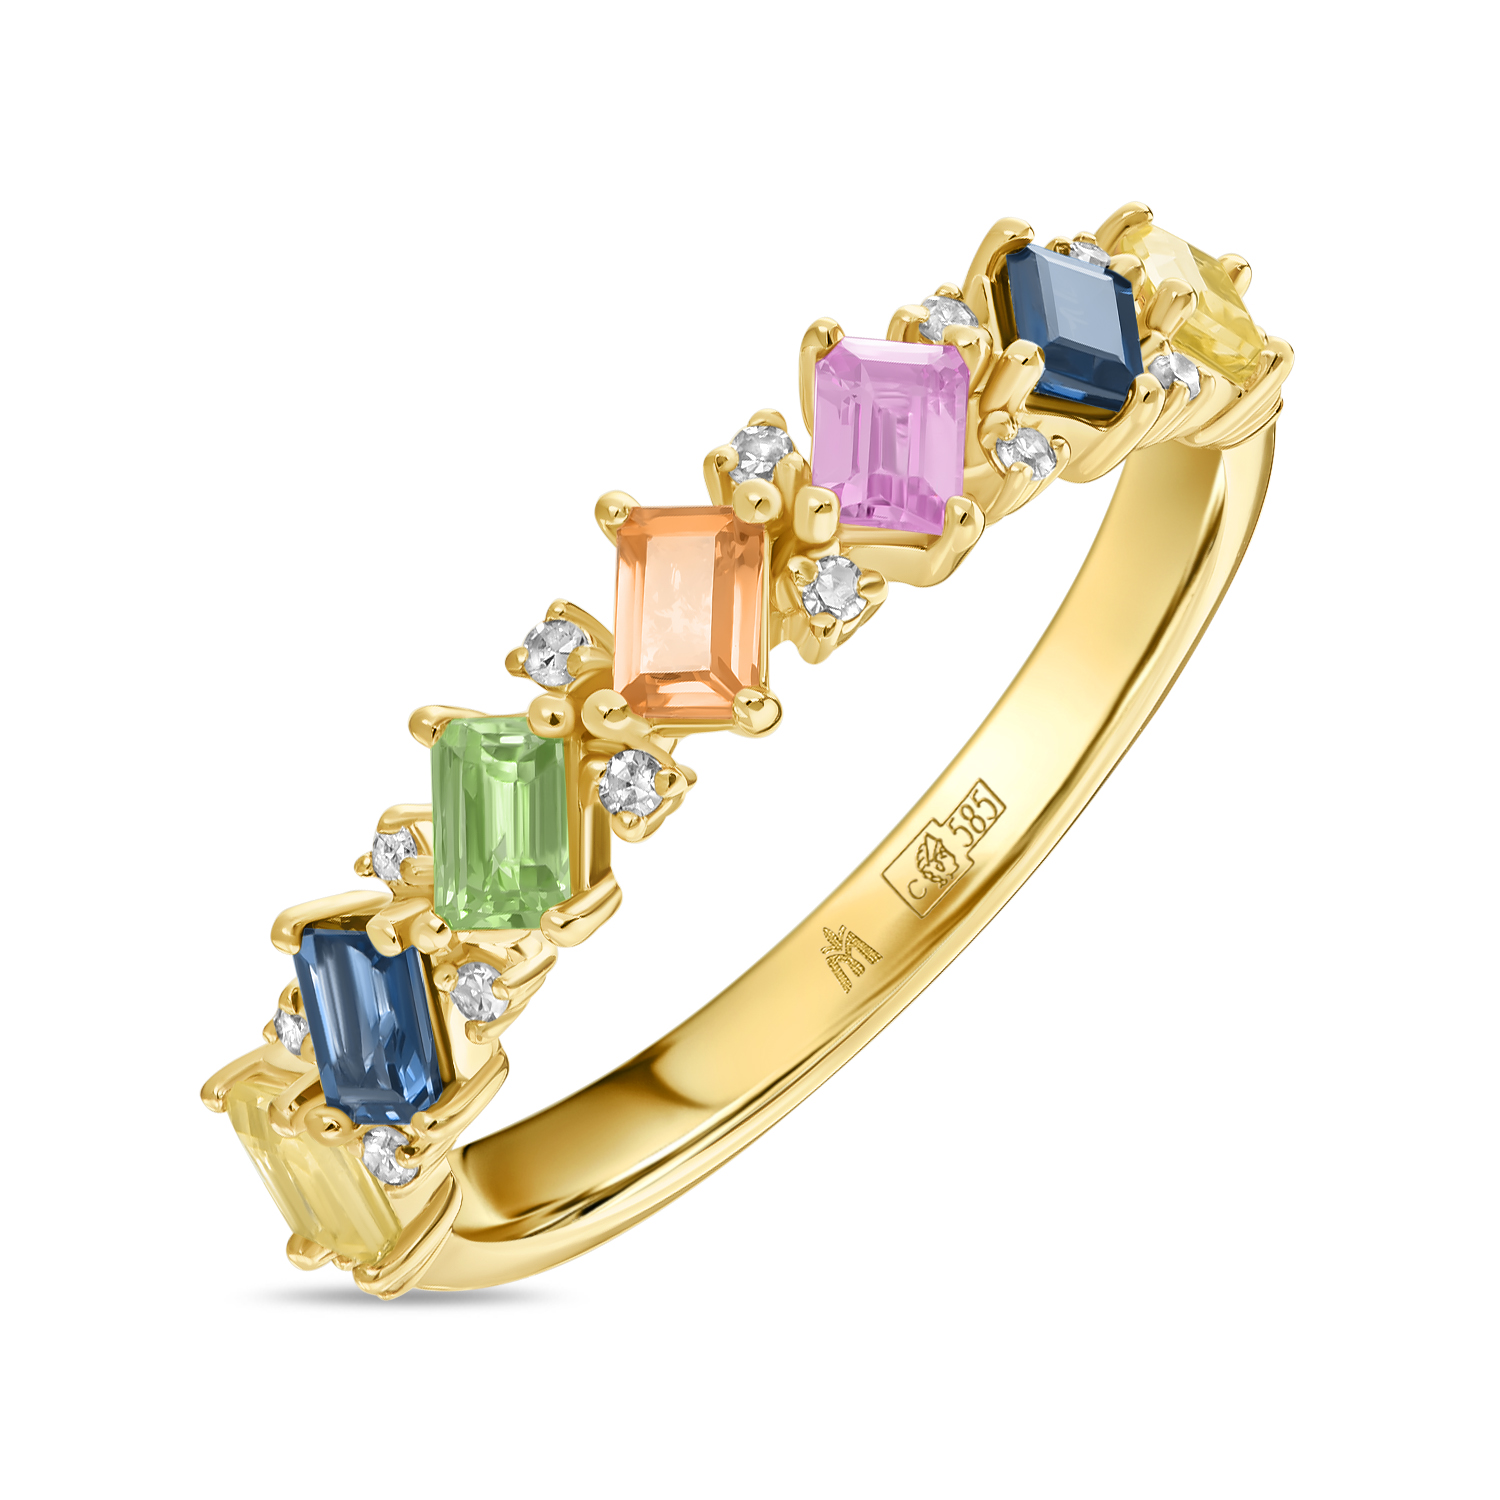 Кольца МЮЗ Кольцо с бриллиантами, сапфирами и цветными сапфирами кольца мюз кольцо с бриллиантом и цветными сапфирами